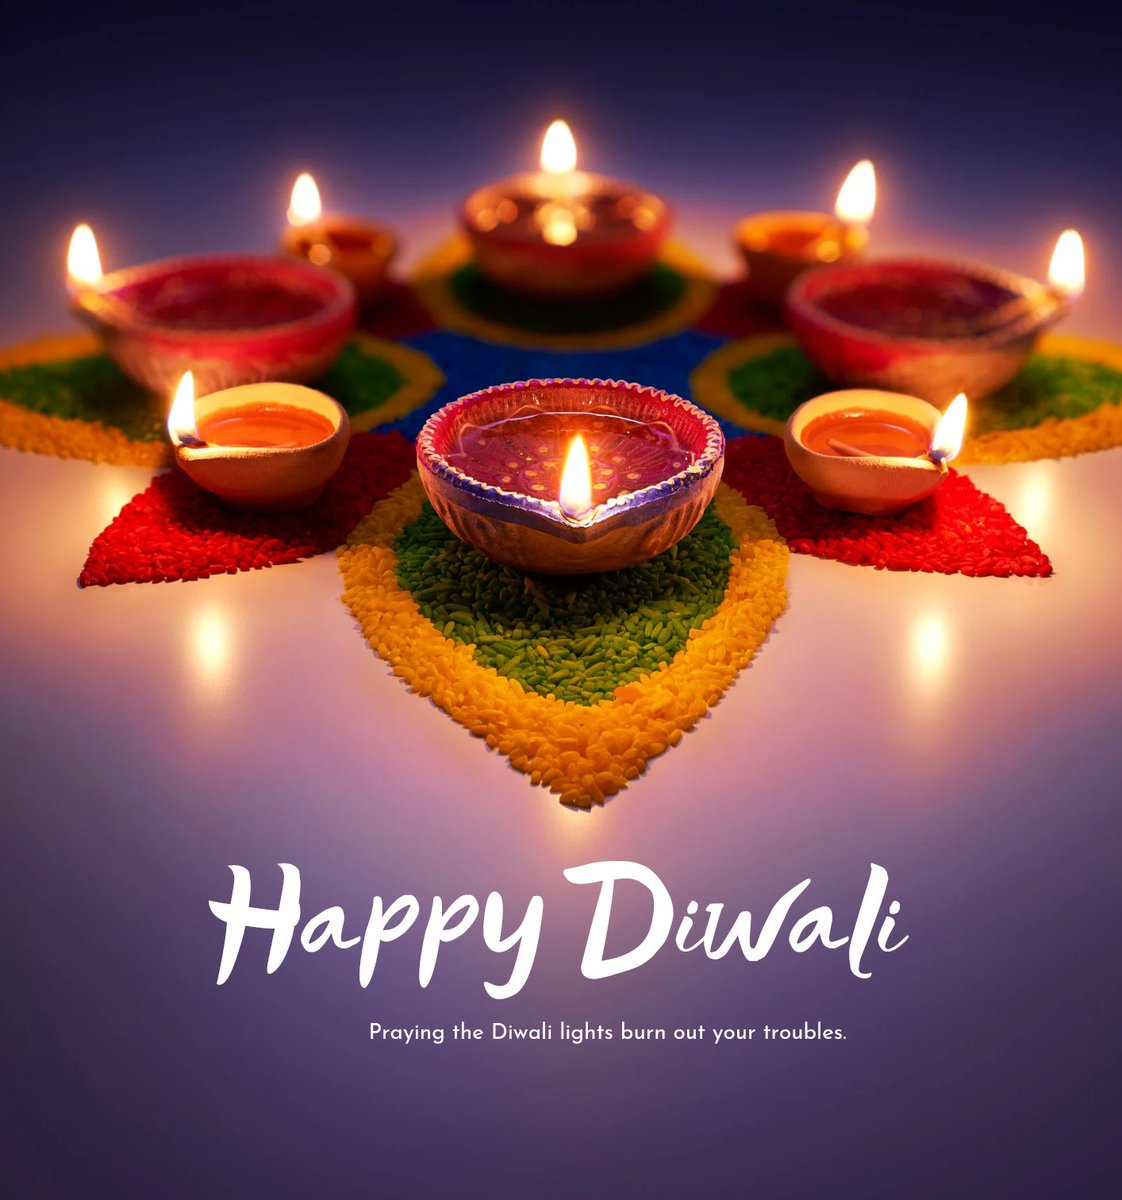 Wishing you all a Happy and Safe Deepavali! #HappyDiwali